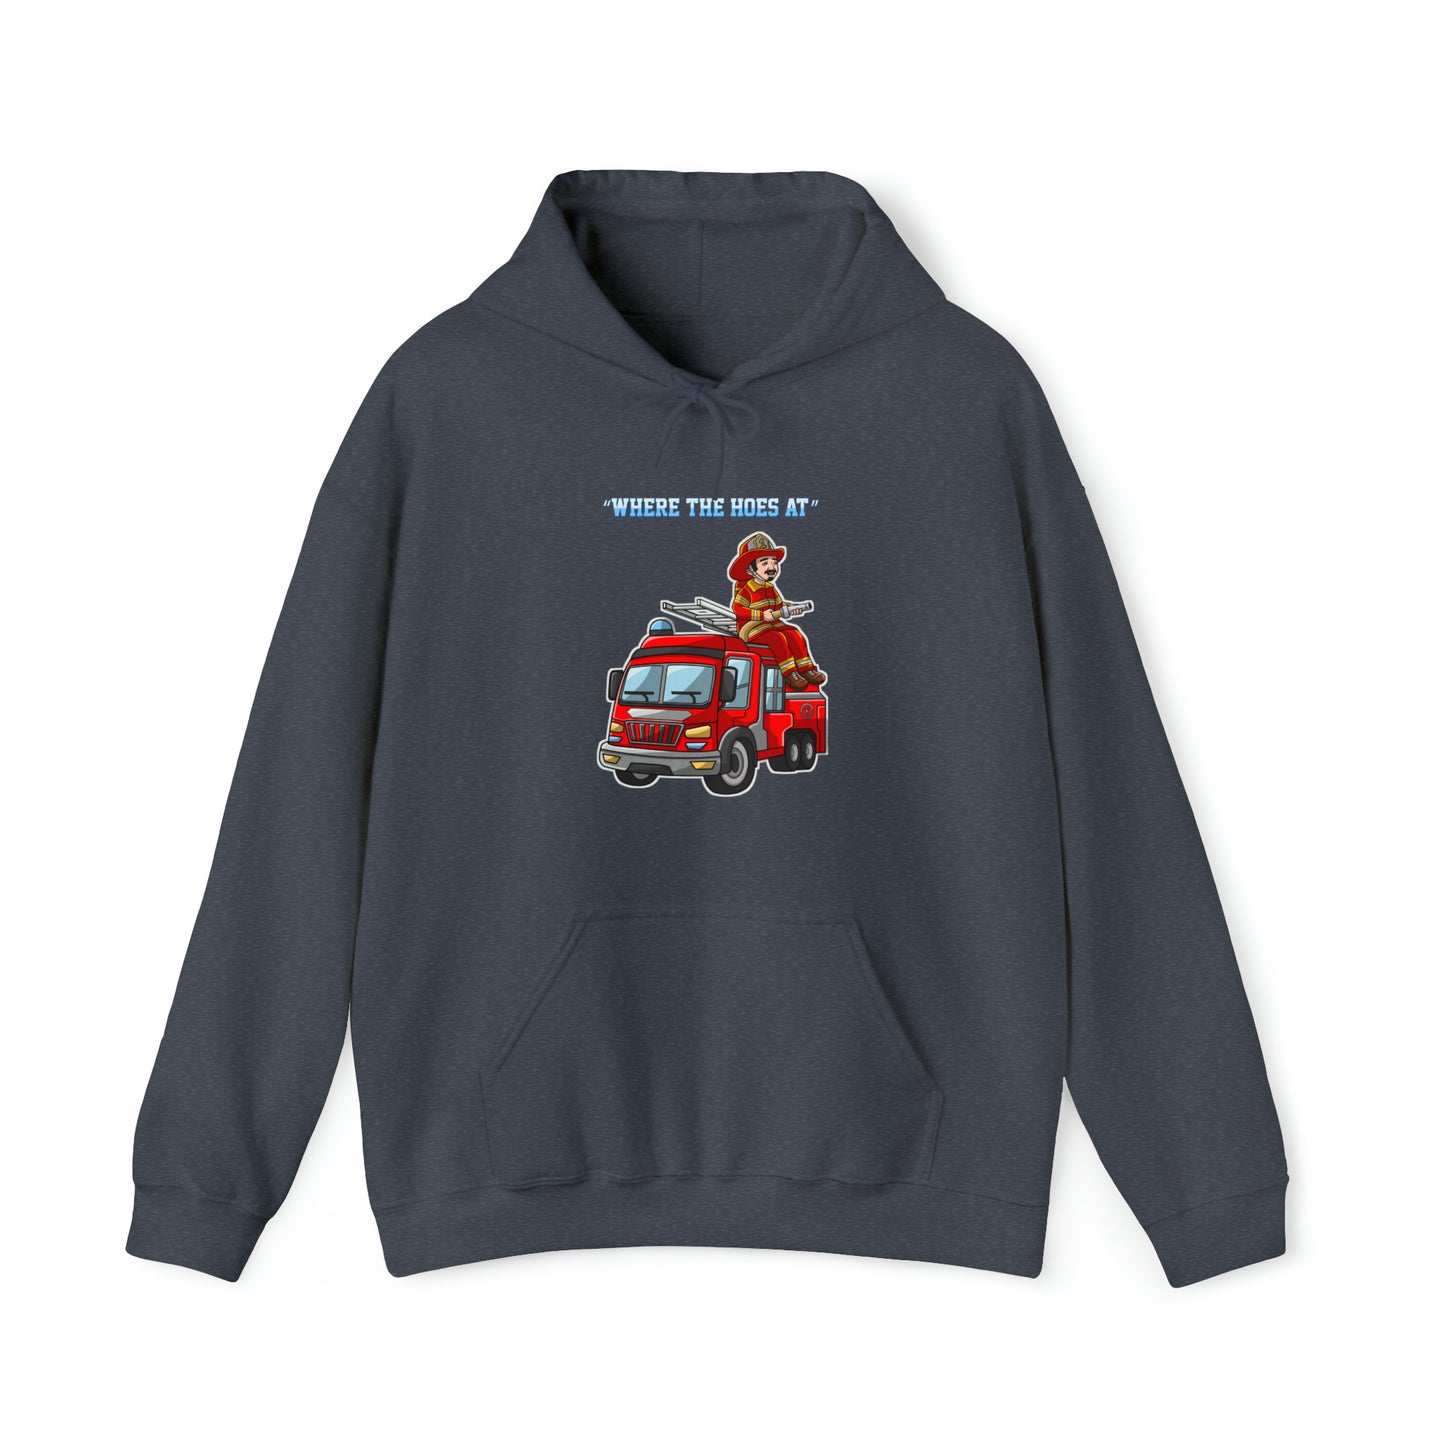 Custom Parody Hooded Sweatshirt, Where the hoes at design